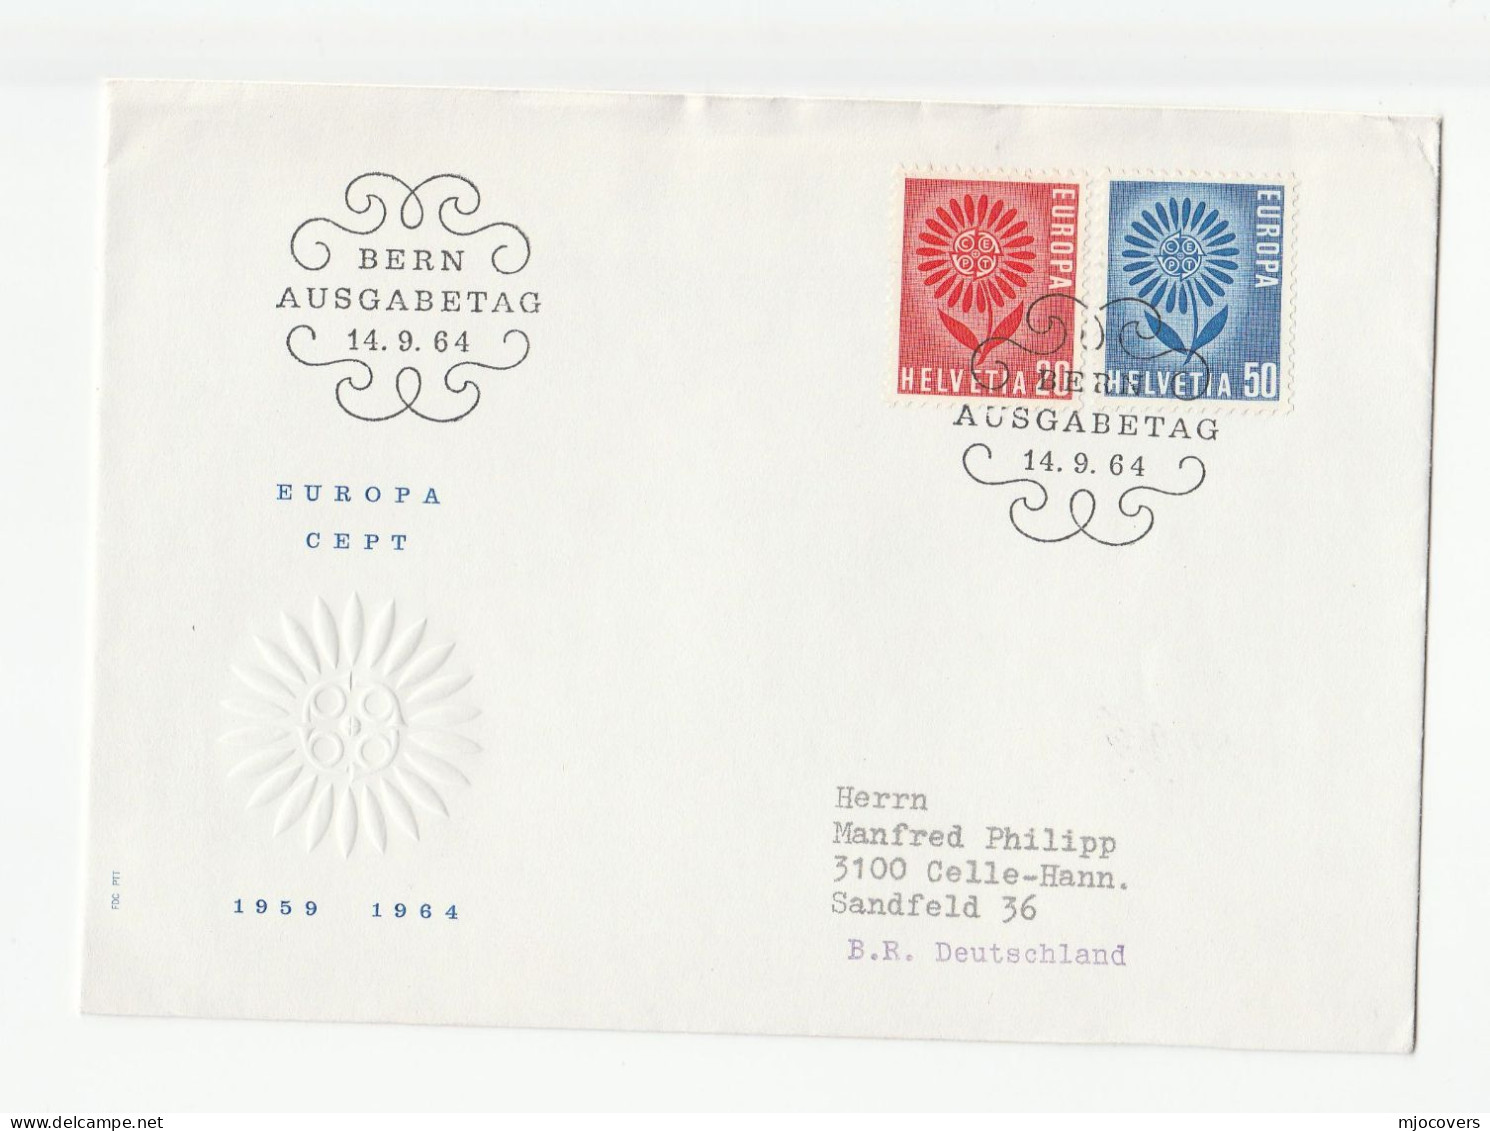 EUROPA 10 Diff SWITZERLAND FDCs 1959 - 1977 Fdc Cover Stamps - Verzamelingen